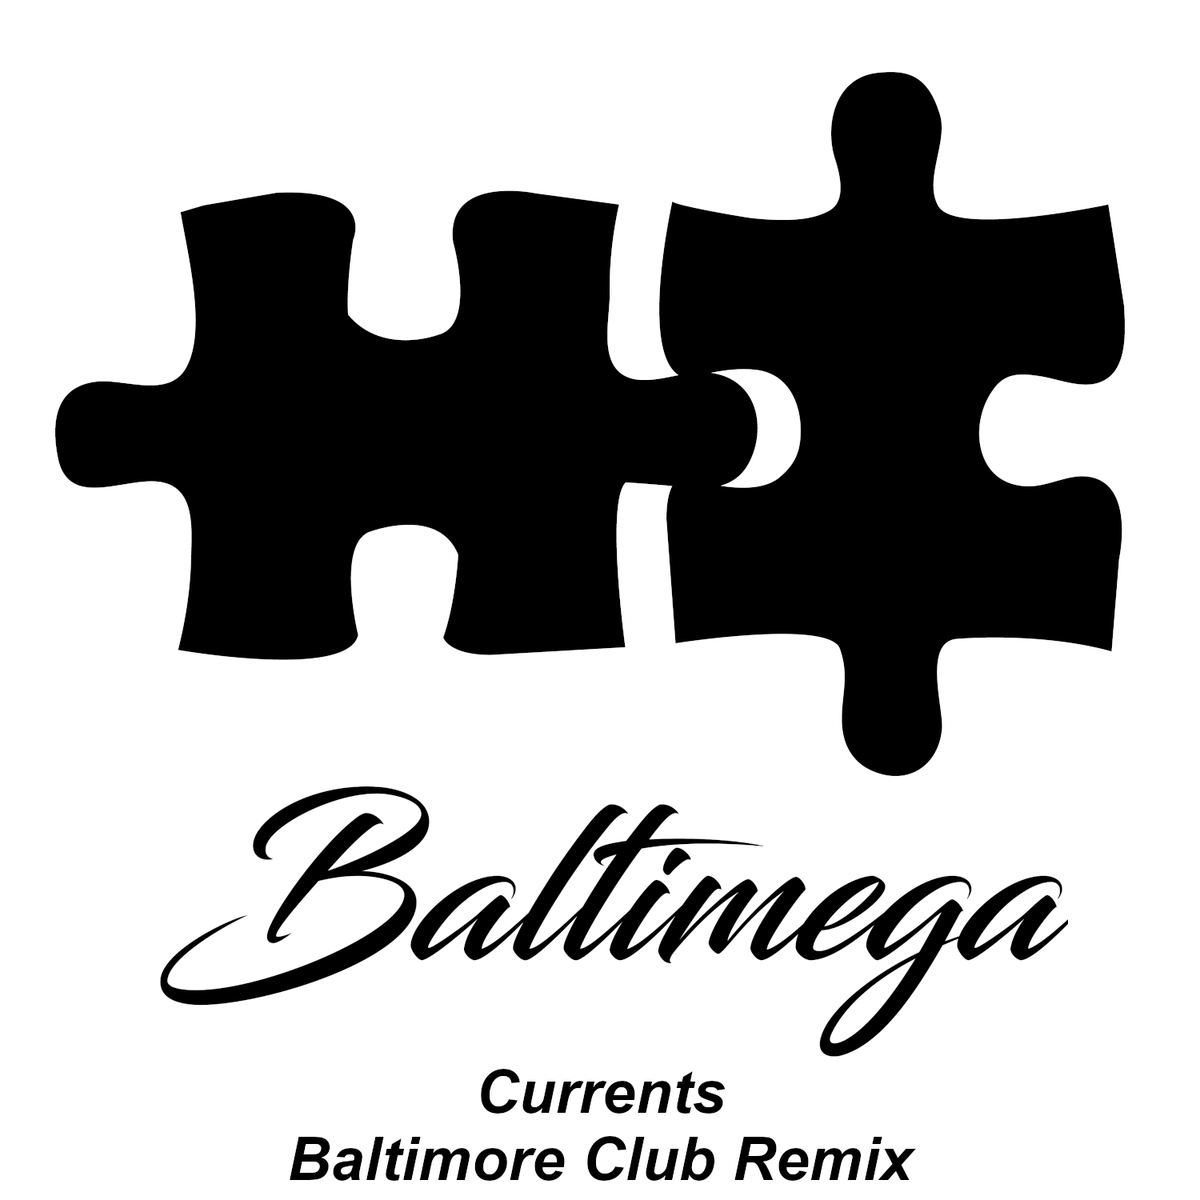 Baltimega - Currents (#BaltimoreClub Remix)

Download/Stream Below

#Bandcamp - baltimega.bandcamp.com/track/currents…

#Soundcloud - soundcloud.com/baltimega/curr…

#Audius - audius.co/baltimega/balt… 

#bmoreclub #jerseyclub #clubmusic #phillyclub #drake #honestlynevermind #baltimoremusic